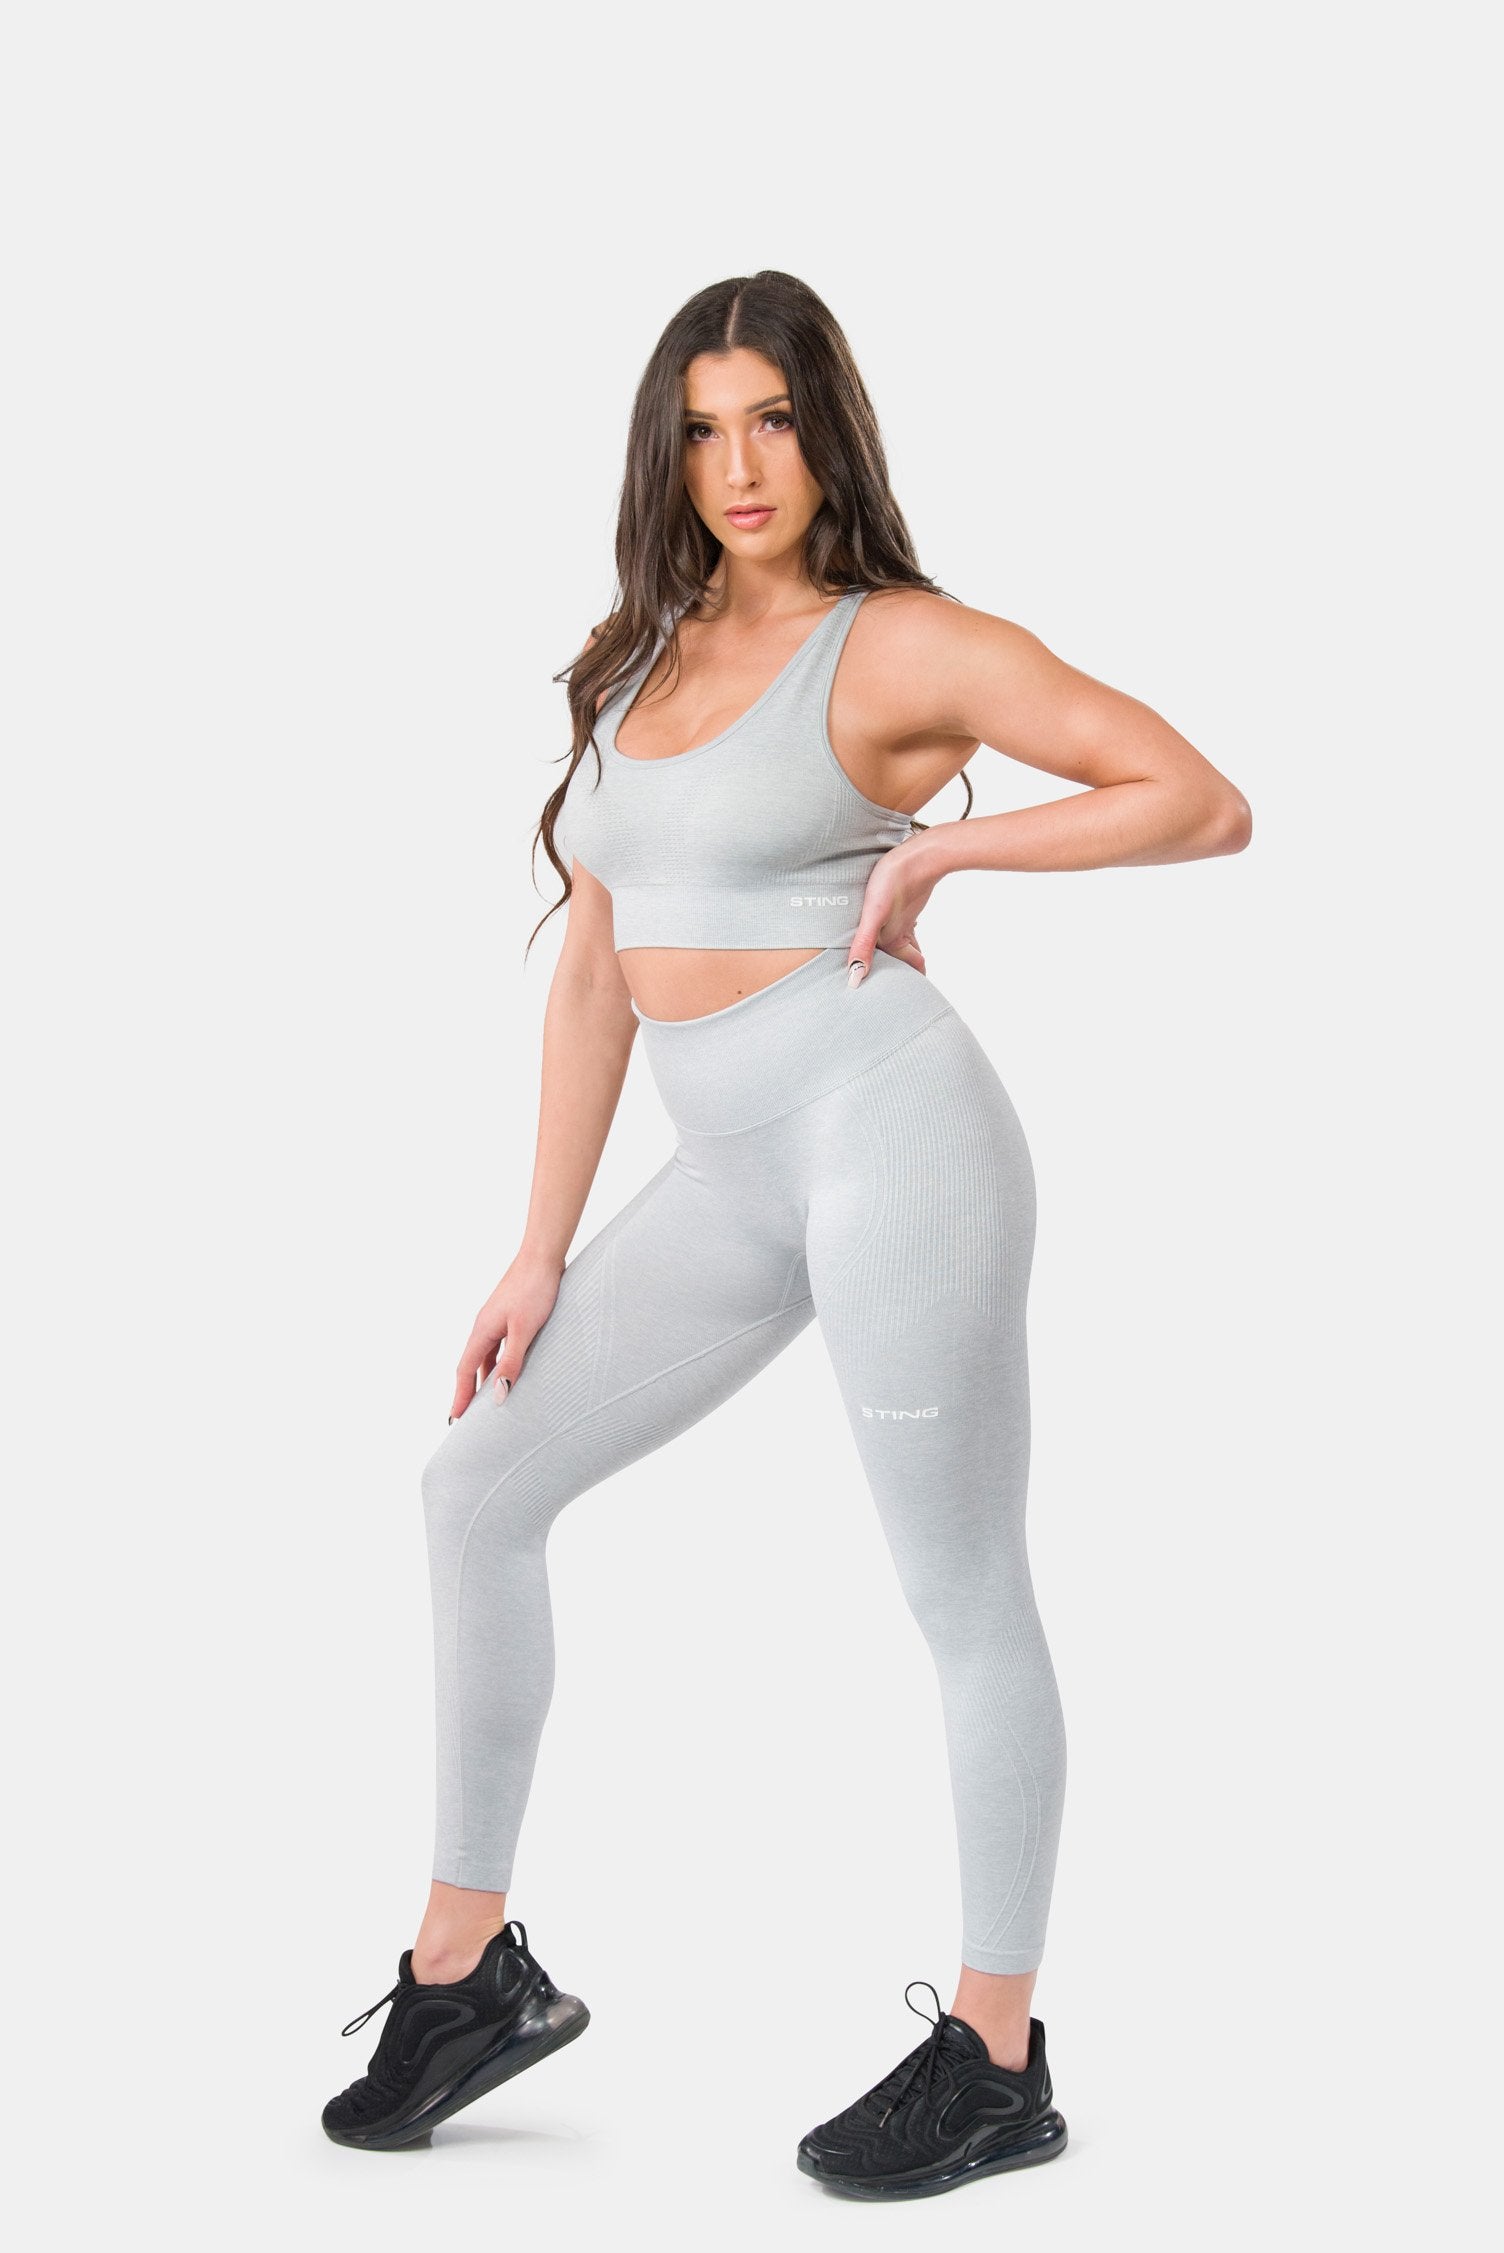 Women's Sports Bra Gym Sportswear Workout Yoga Activewear Tops White Grey  Marble X-Large 